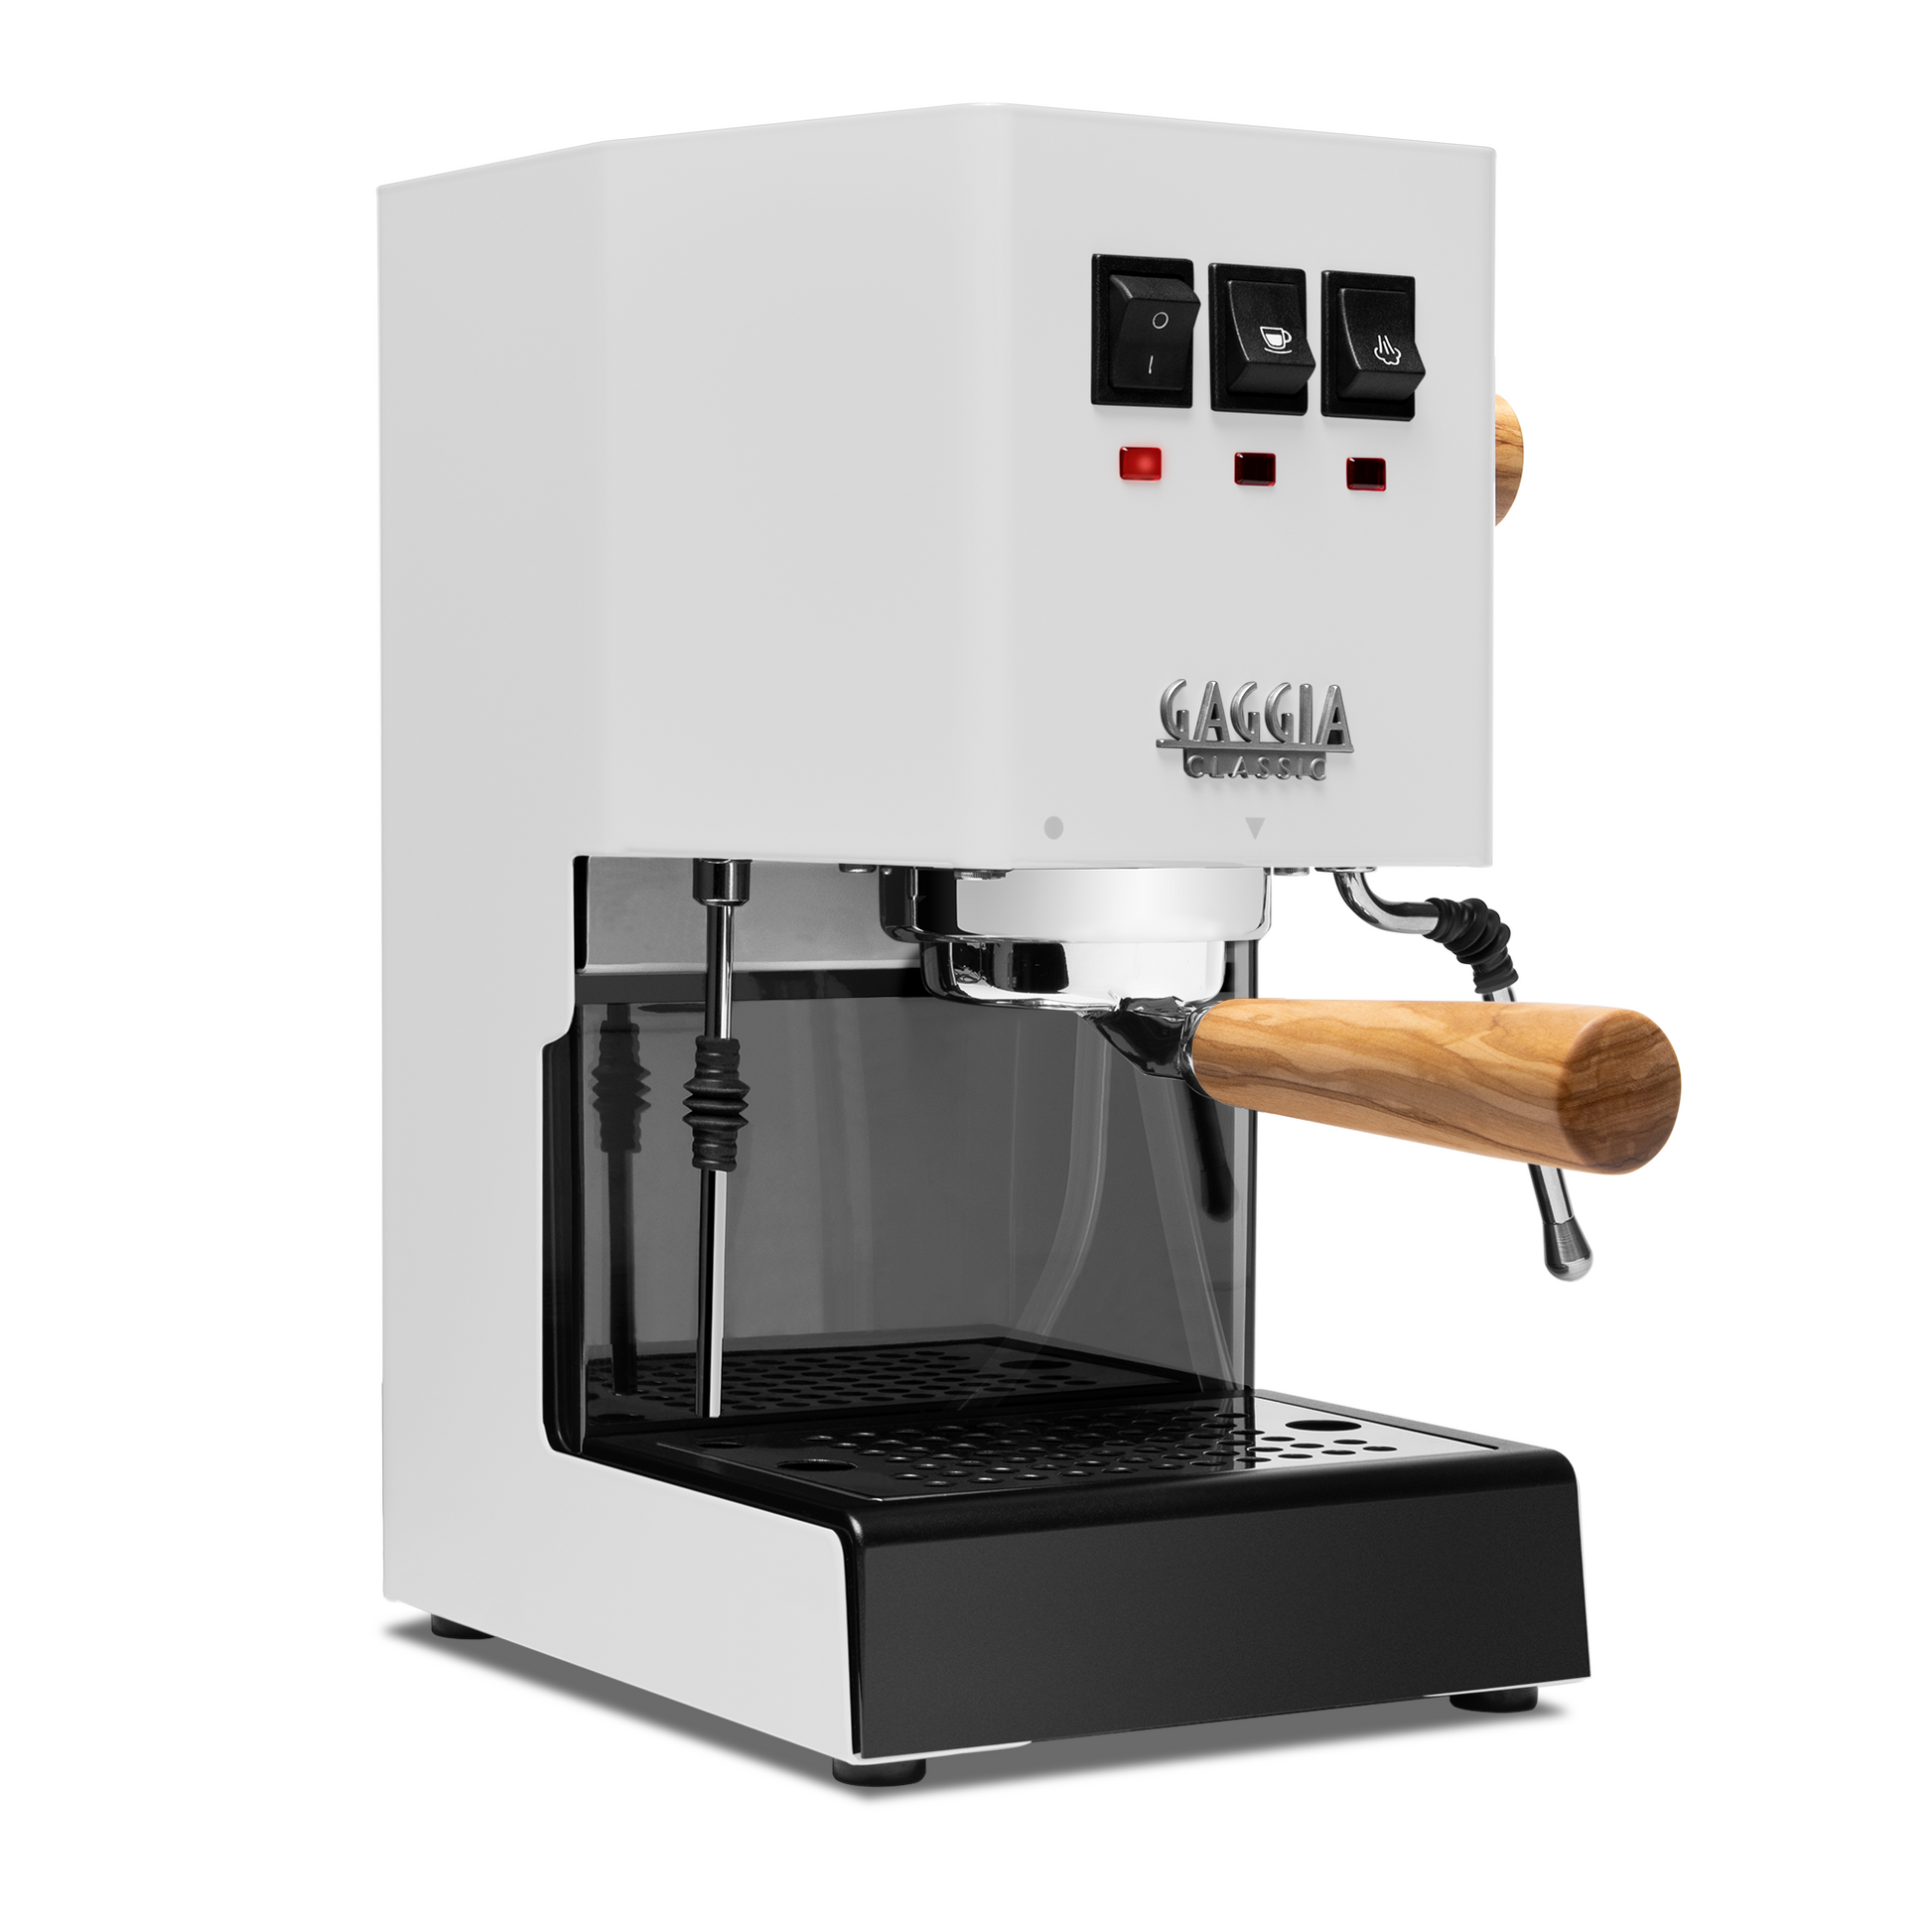 Portable Electric Italian Capsule Coffee Machine USB Rechargeable